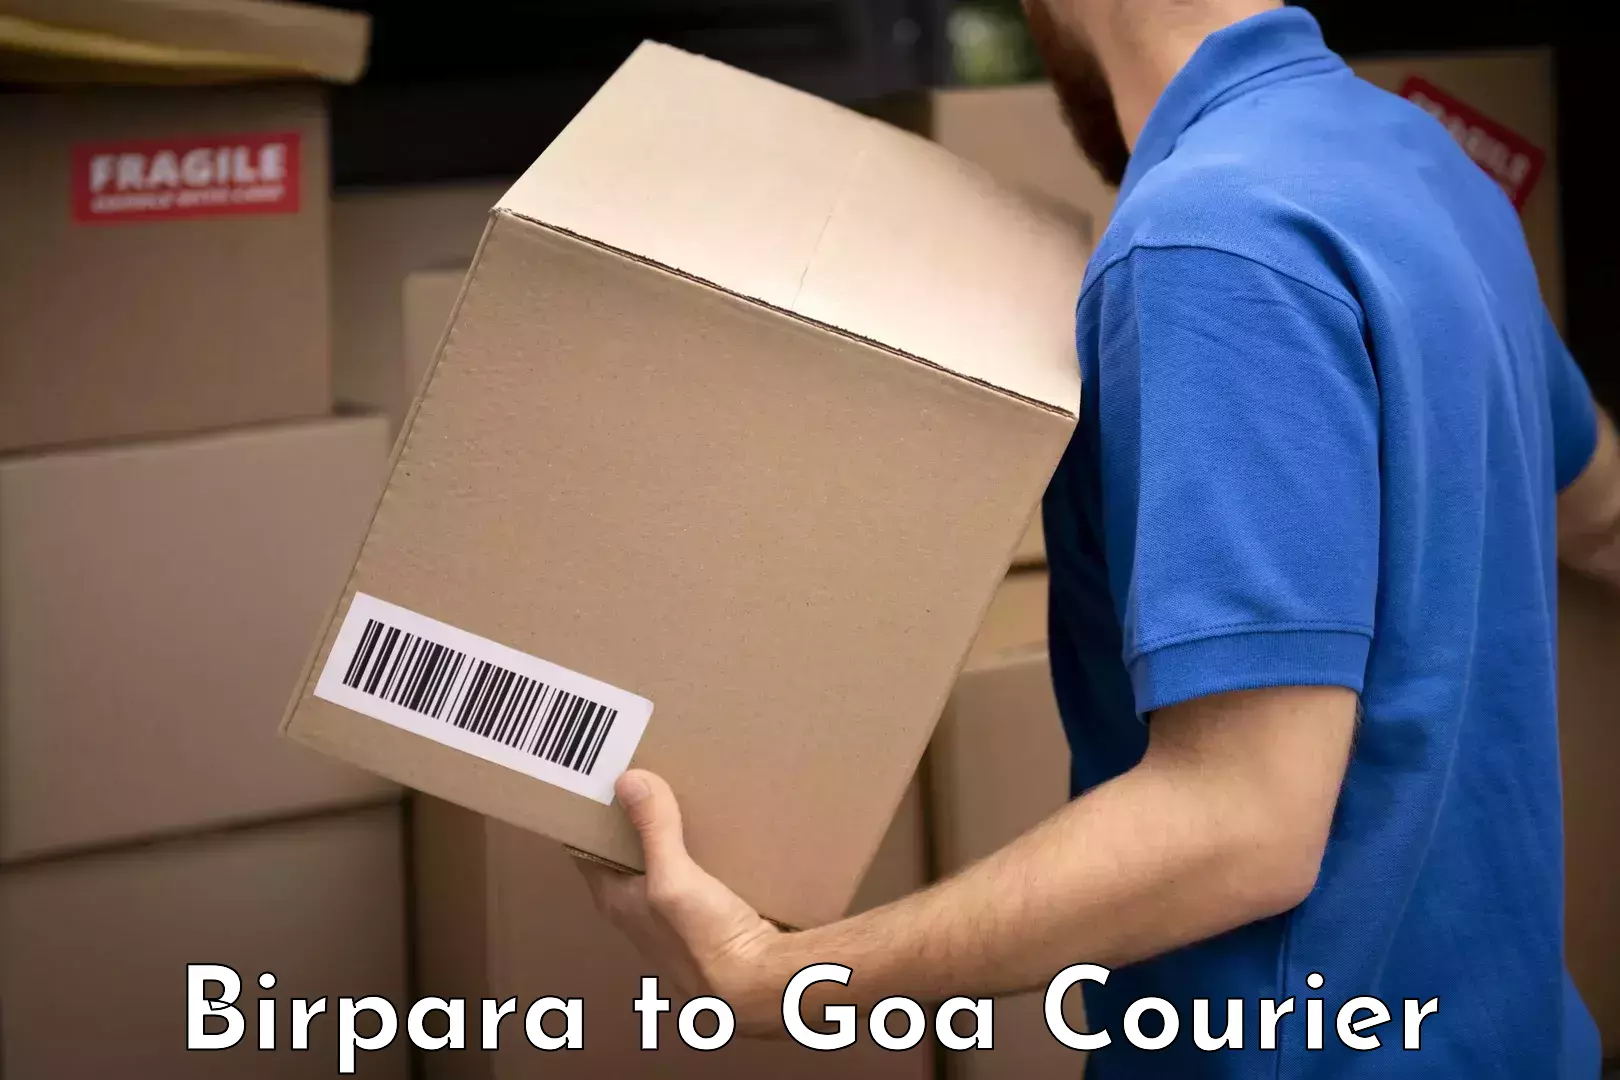 Baggage transport network Birpara to Goa